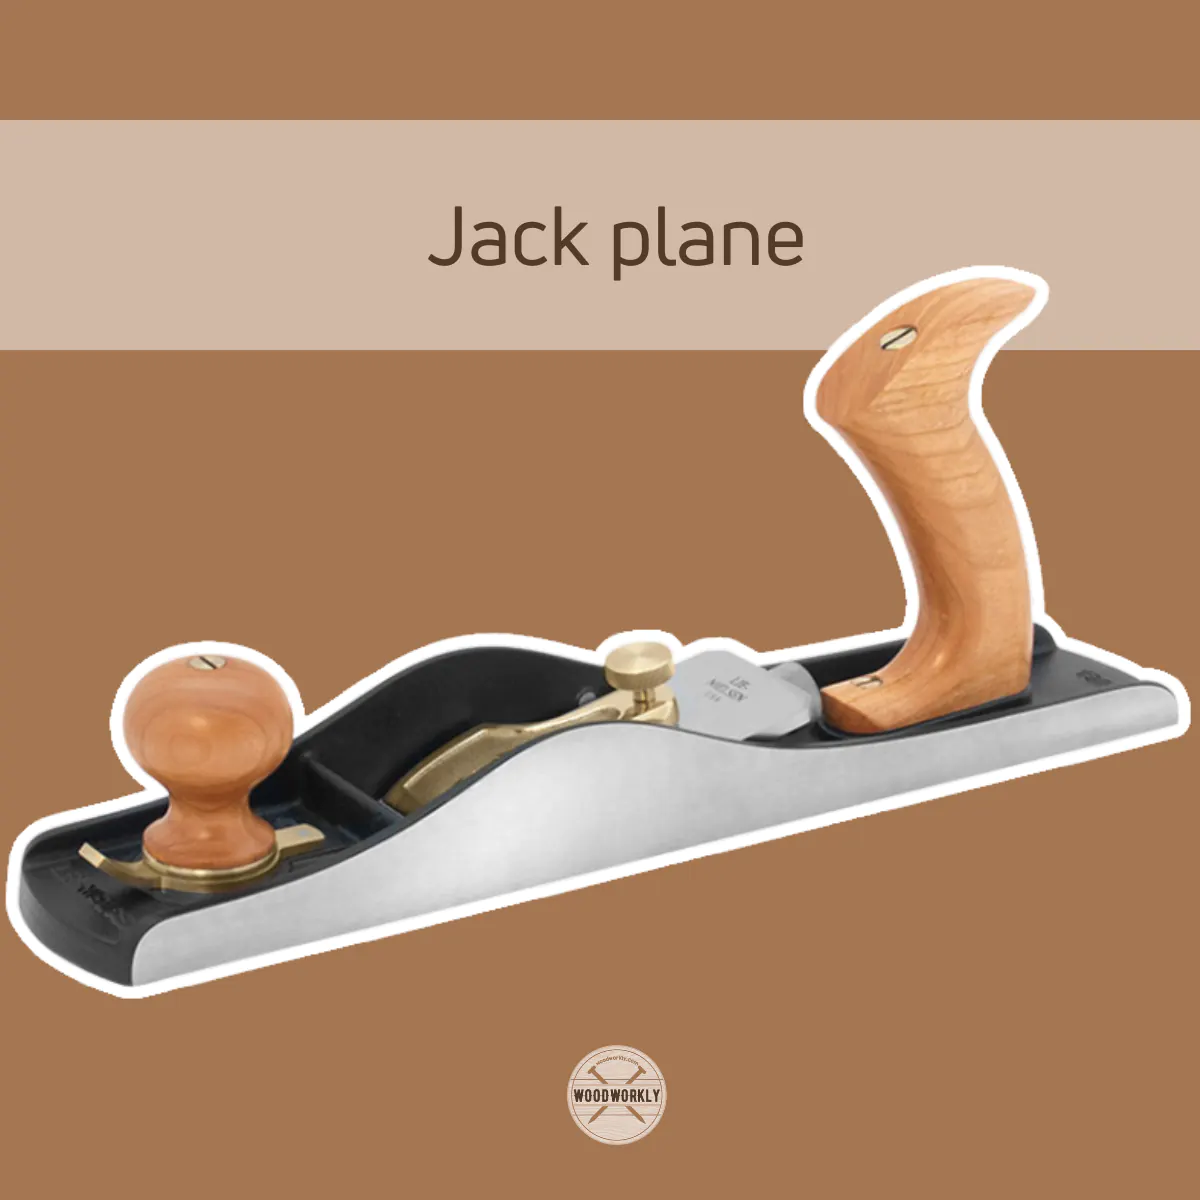 Jack plane